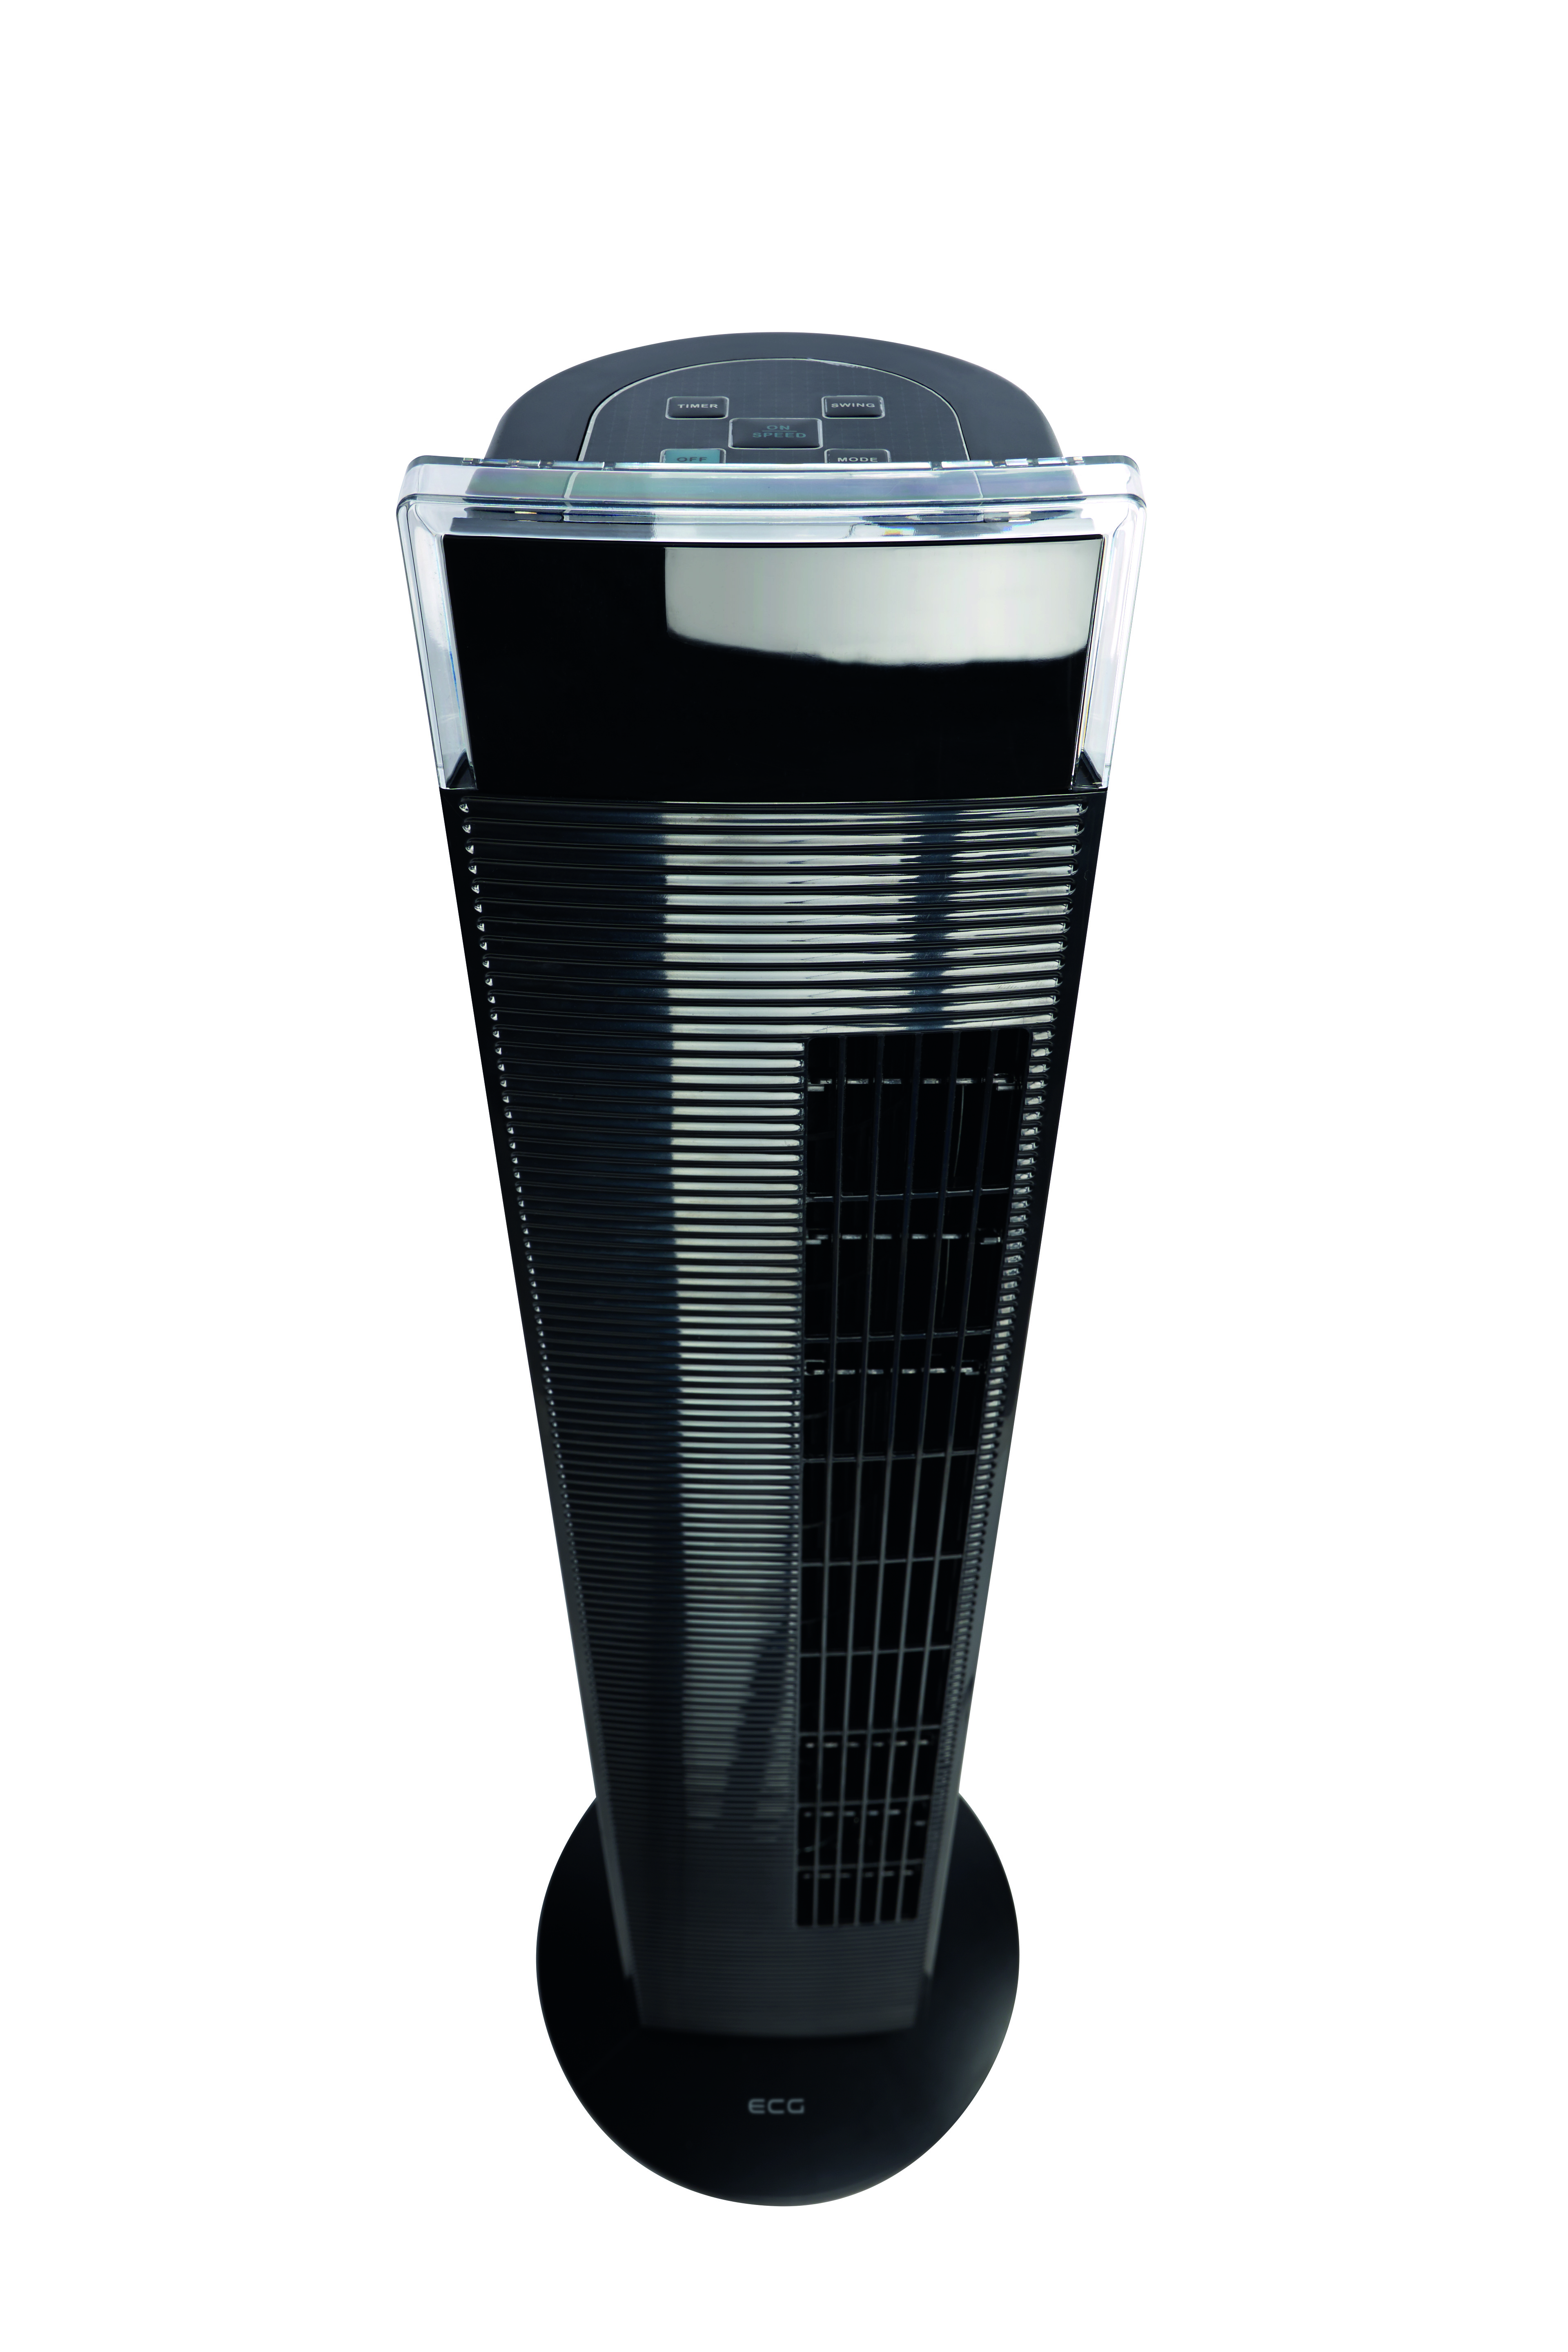 ECG Turmventilator Schwarz | T Turmventilator 91 | FS (65 Watt)